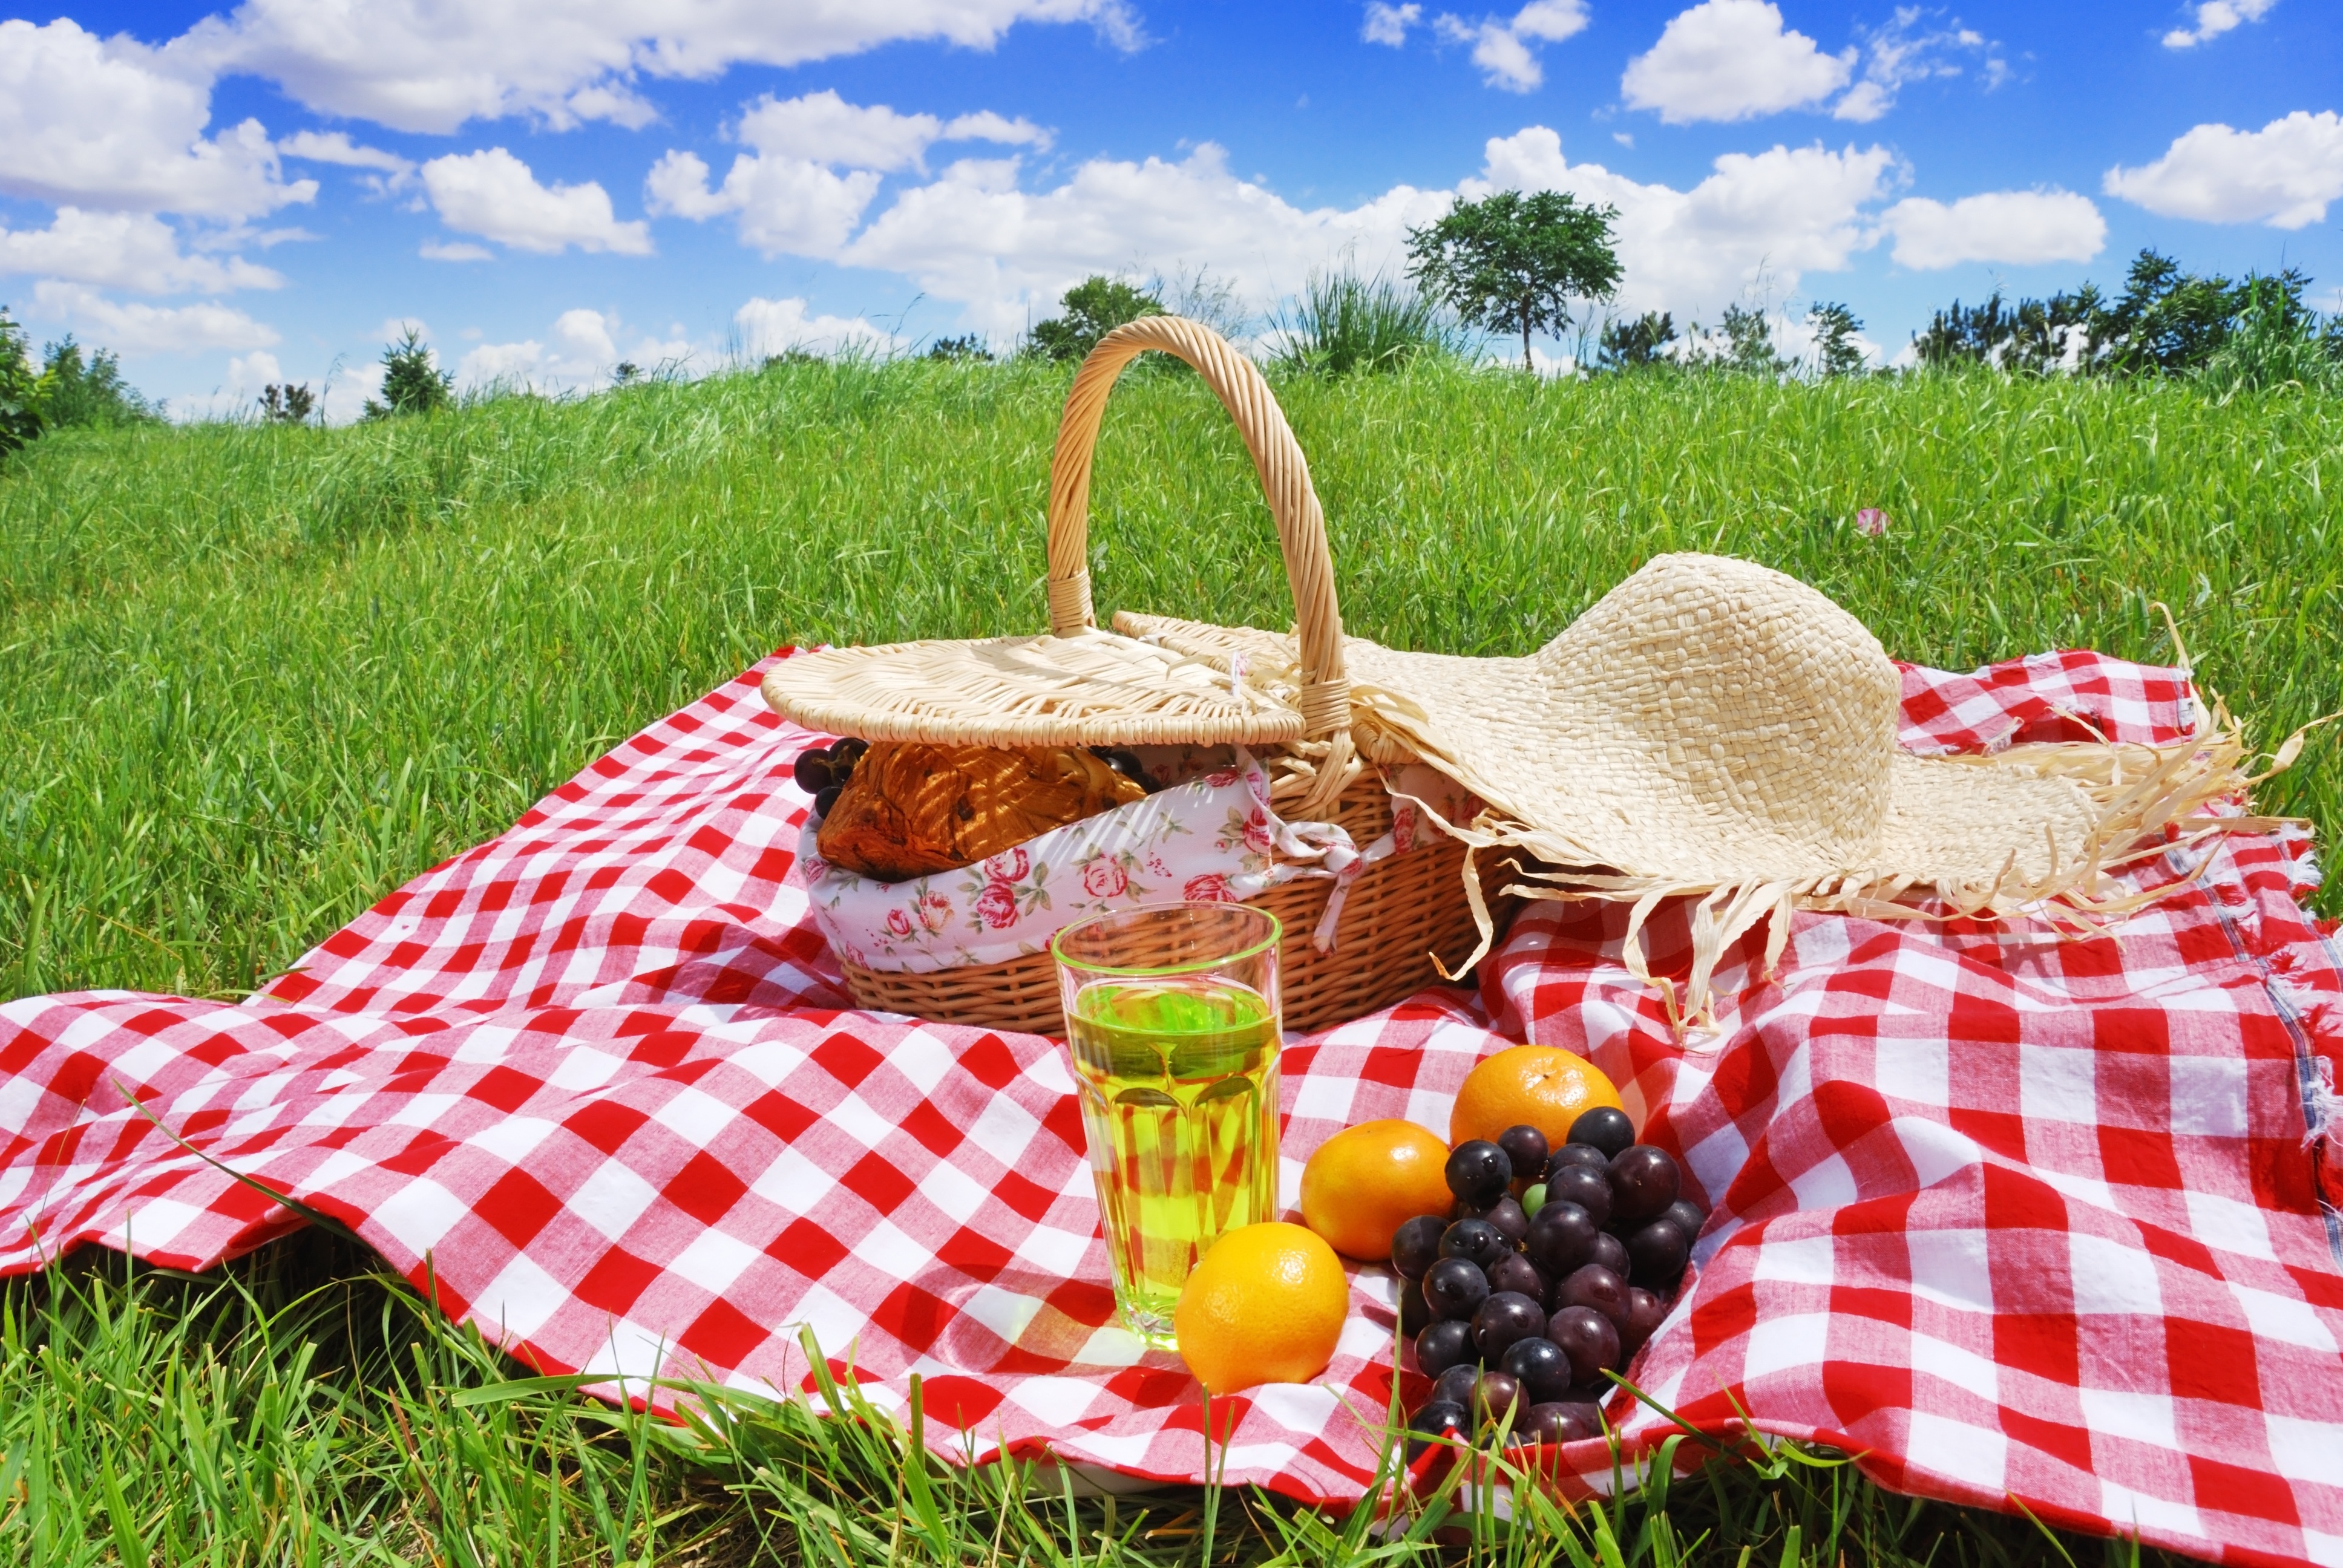 Пикник. Пикник на природе. Летний пикник на природе. Пикник на траве. Лето пикник.